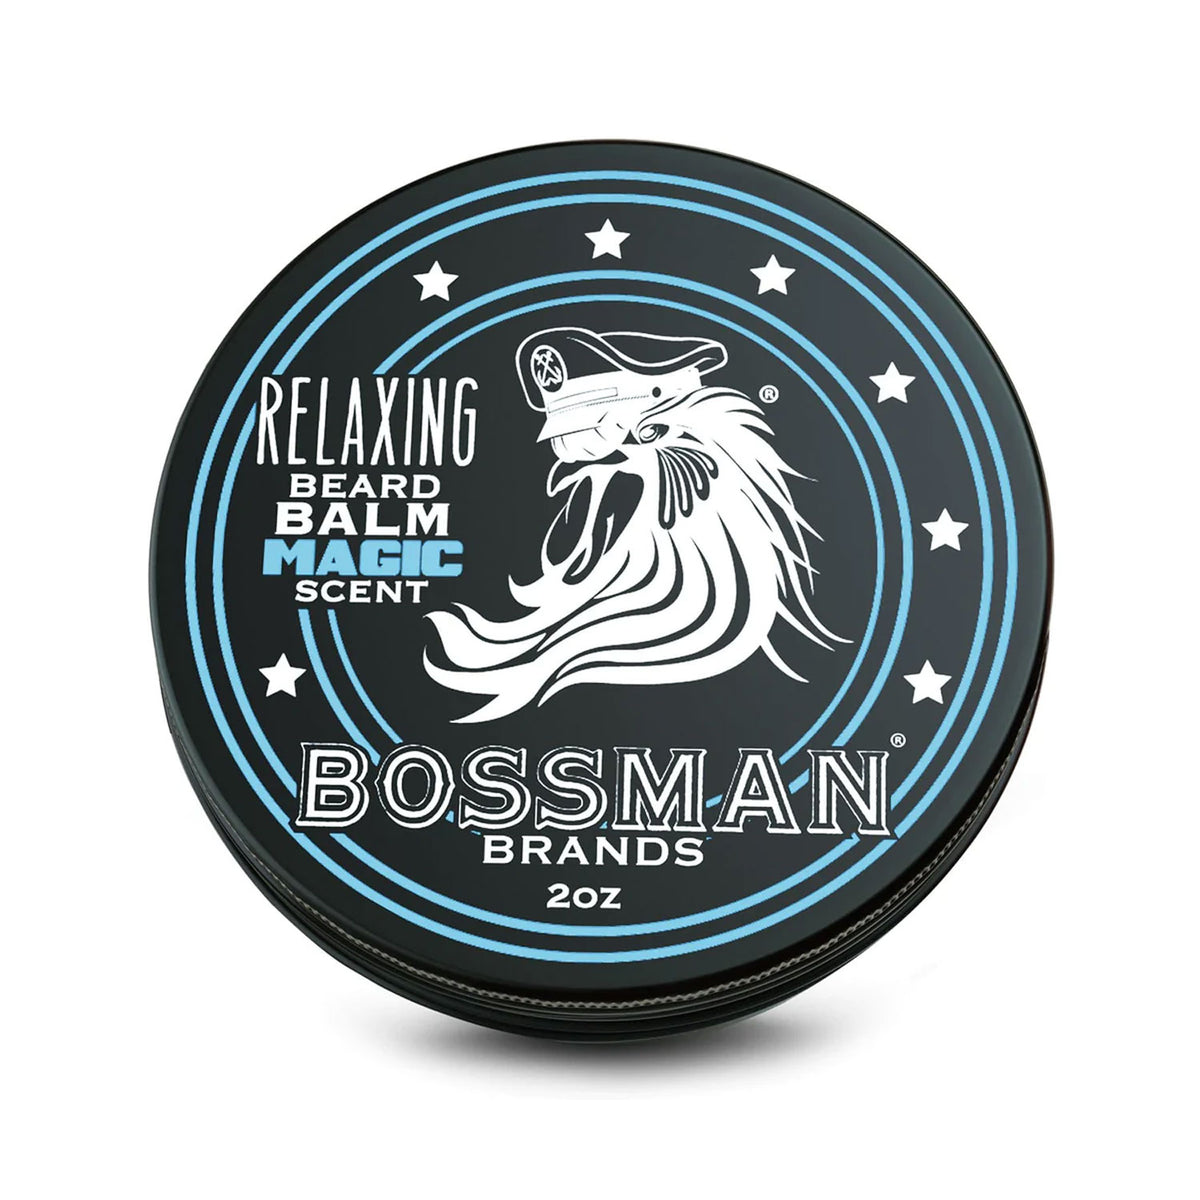 Bossman Relaxing Beard Balm Magic 60ml | Bergamot, Patchouli & Frankincense - Orcadia